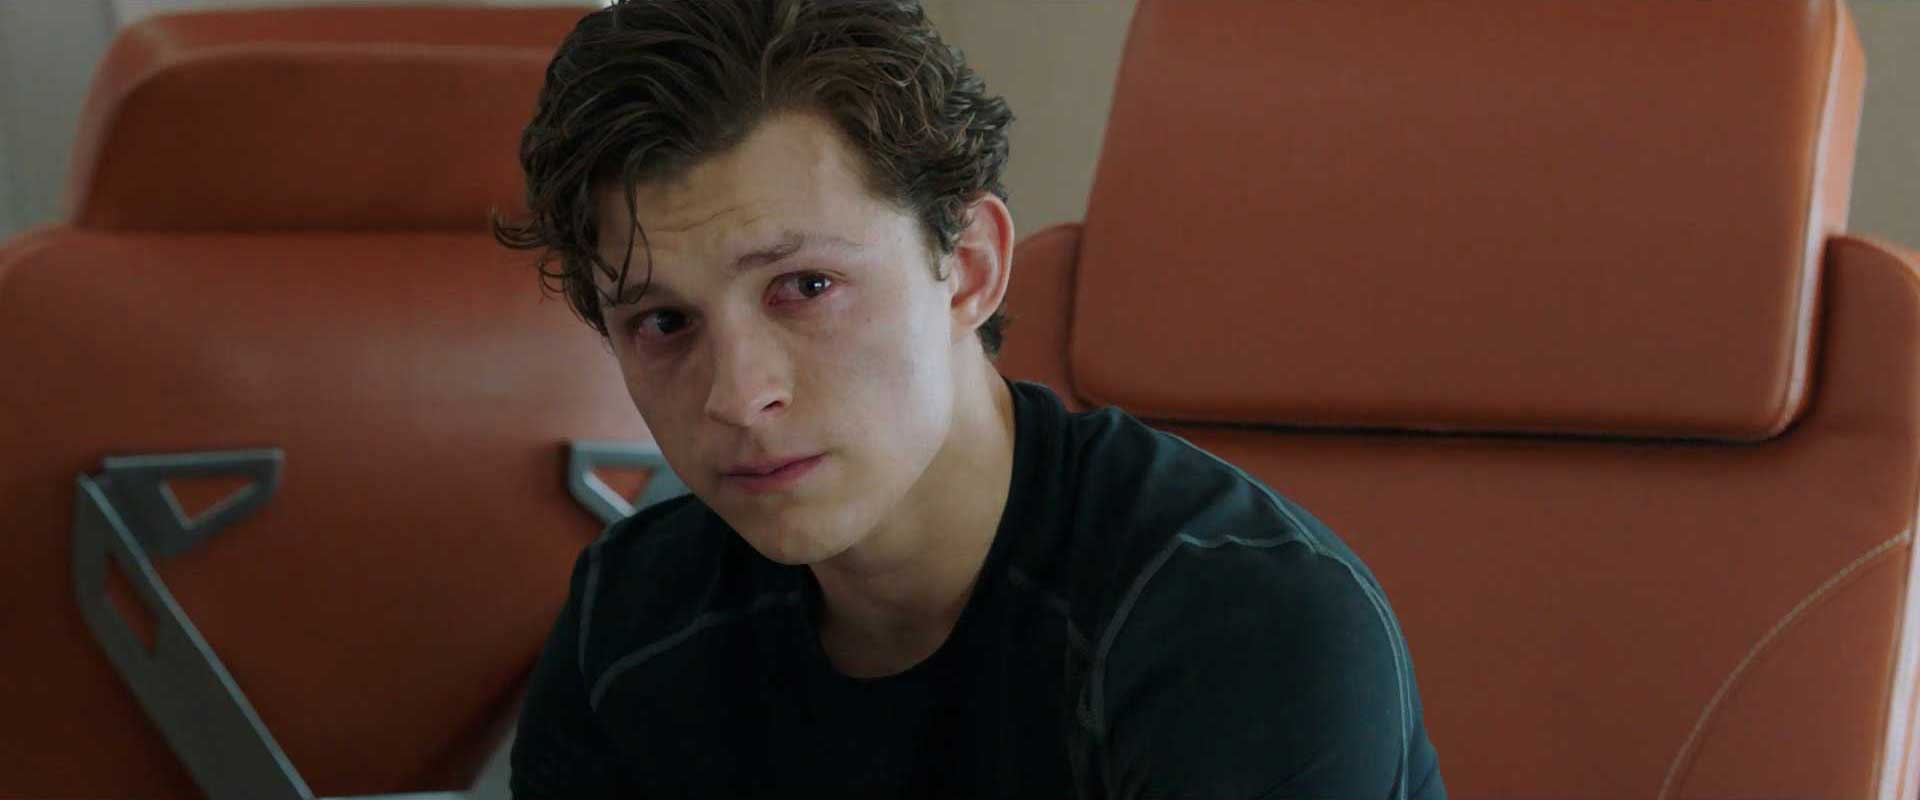 Spider-Man Far From Home Trailer 2 Breakdown - Peter Parker Emotional Tony Stark Death